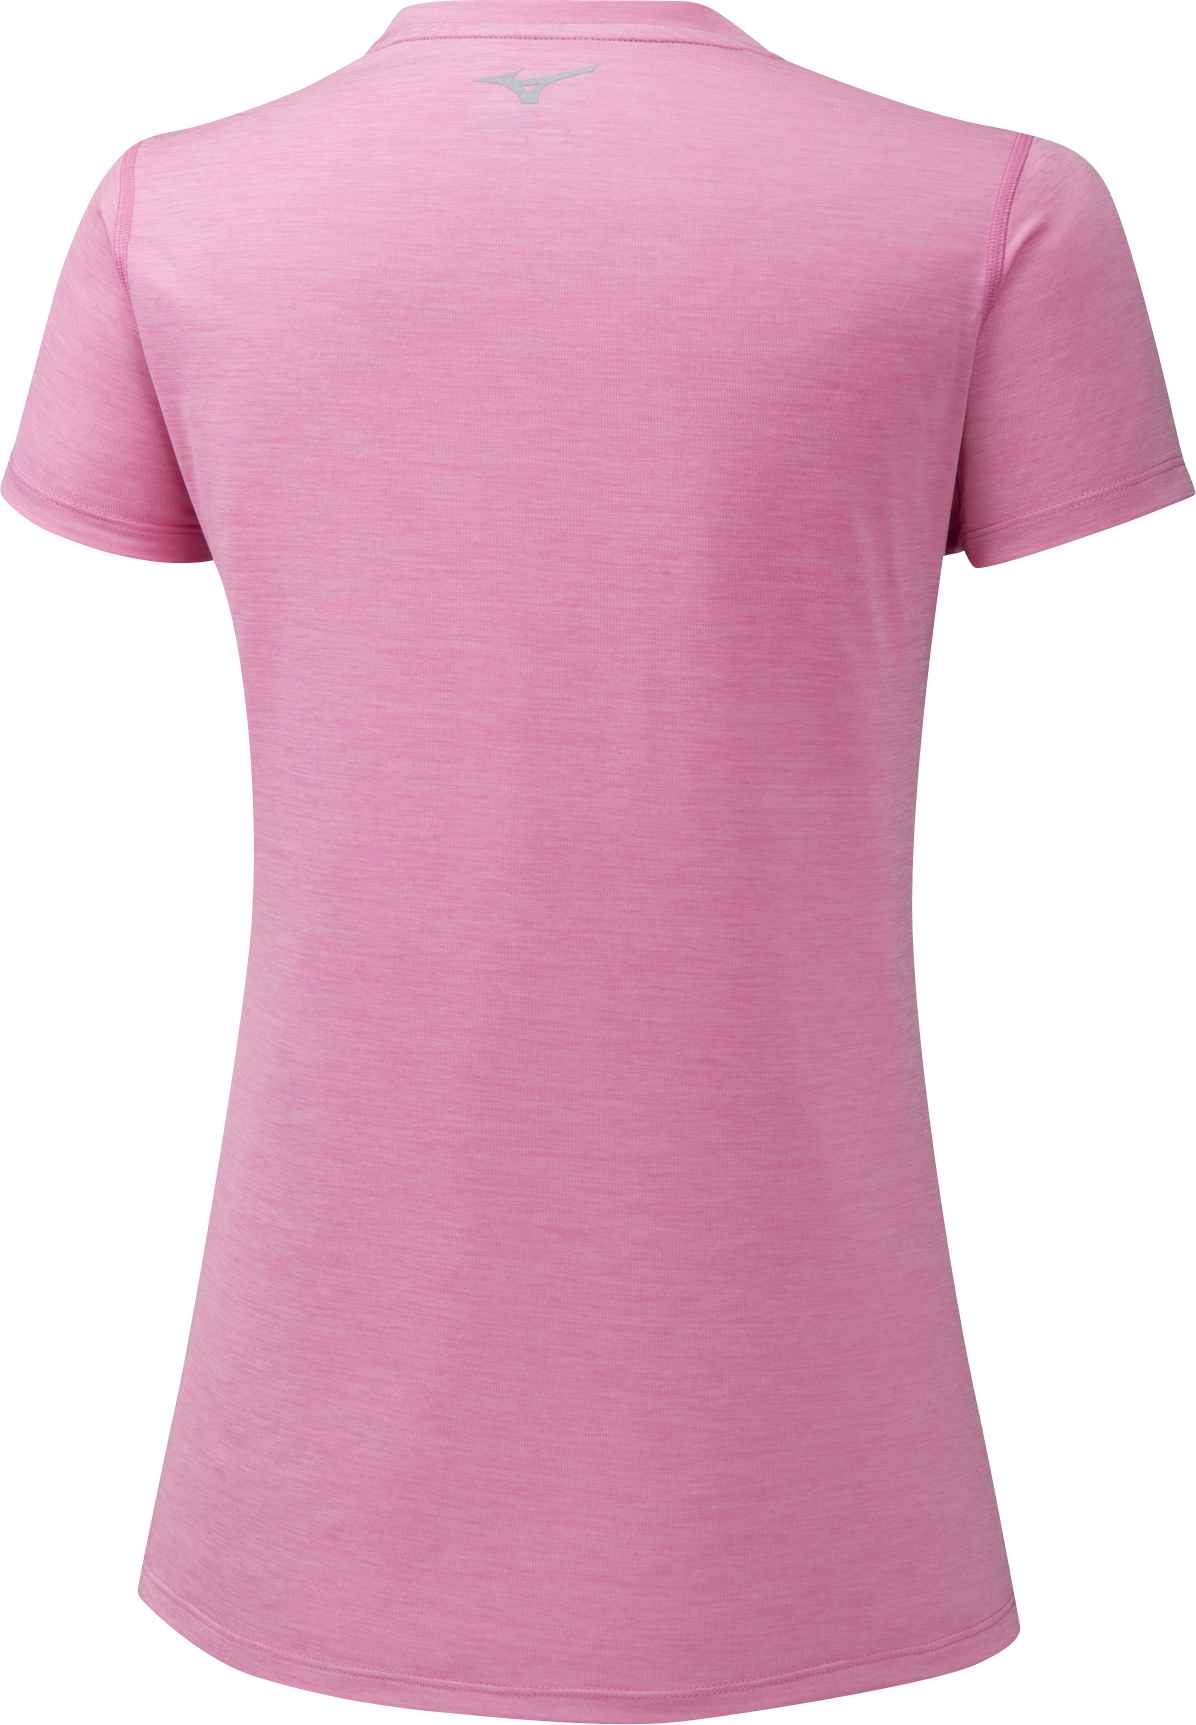 Women’s functional short sleeve T-shirt